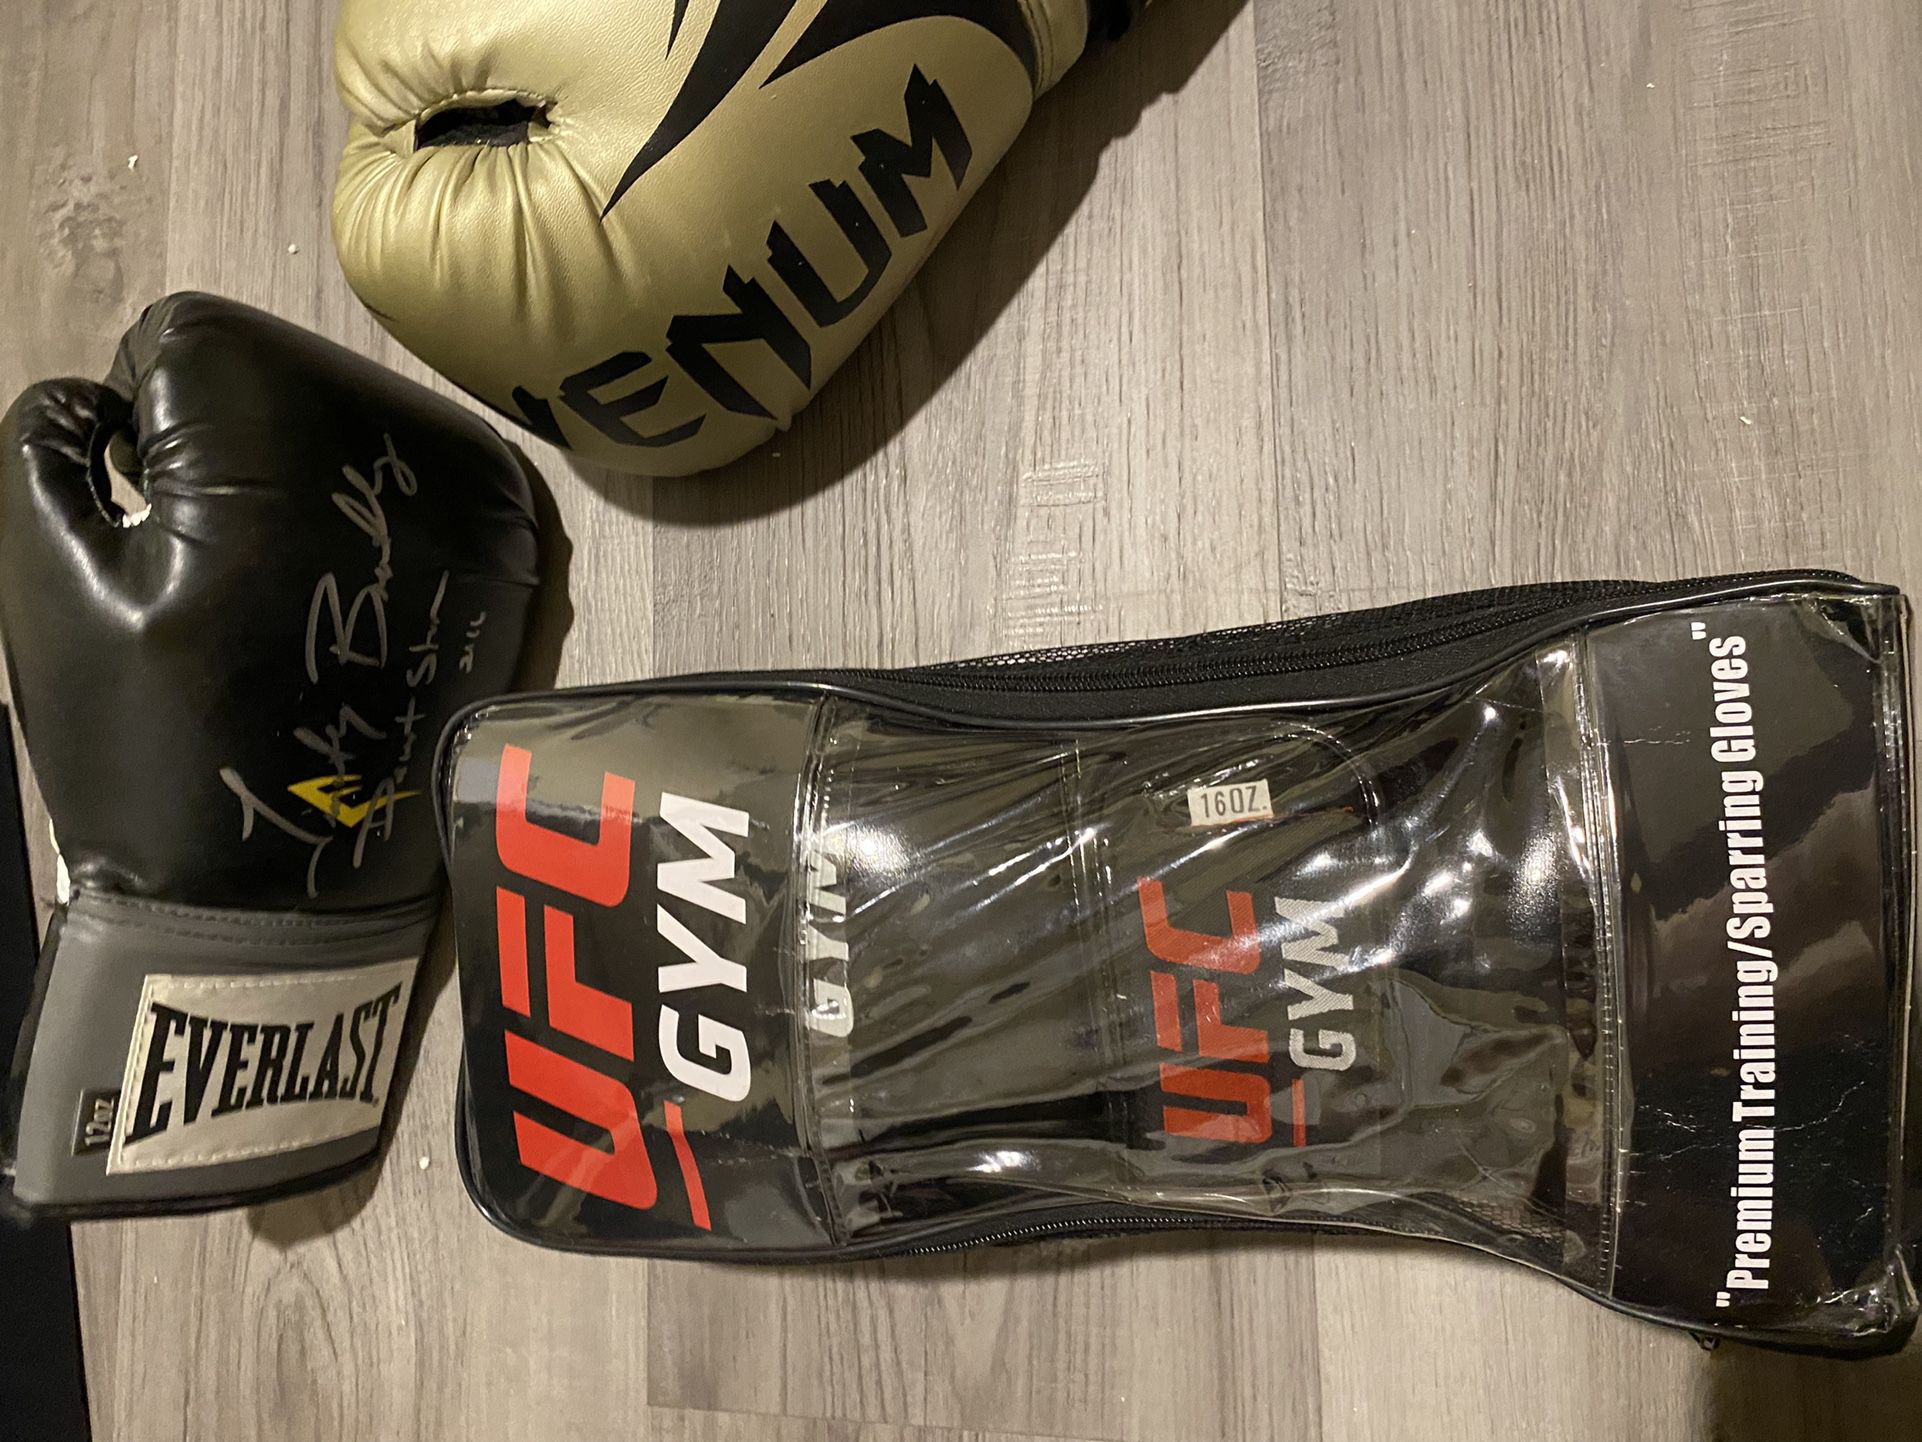 UFC Pro Stand Up Training Glove